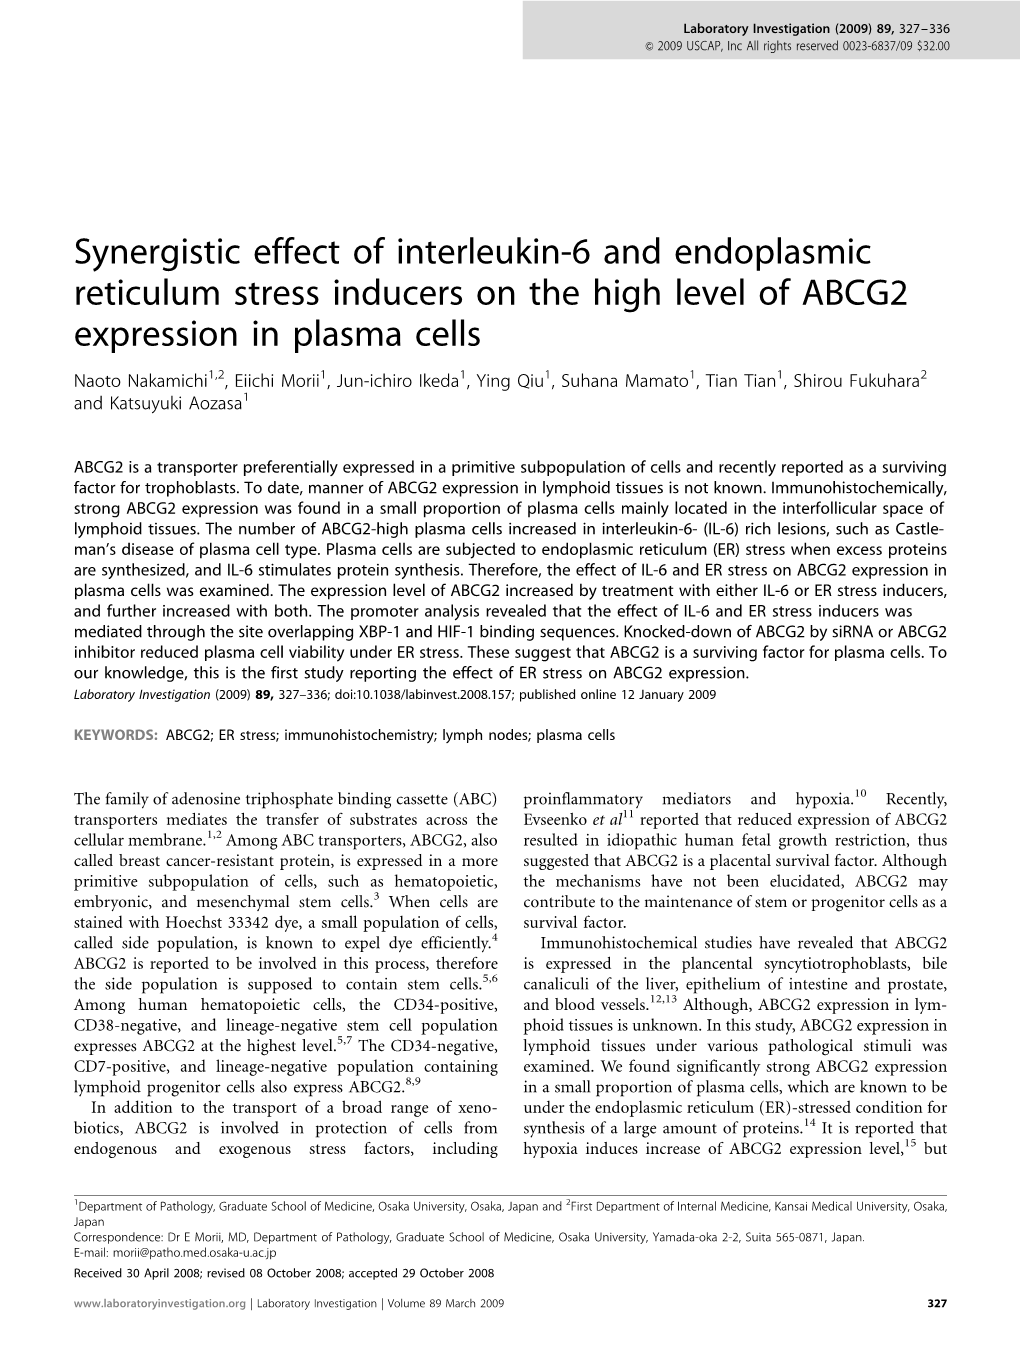 Synergistic Effect of Interleukin-6 and Endoplasmic Reticulum Stress